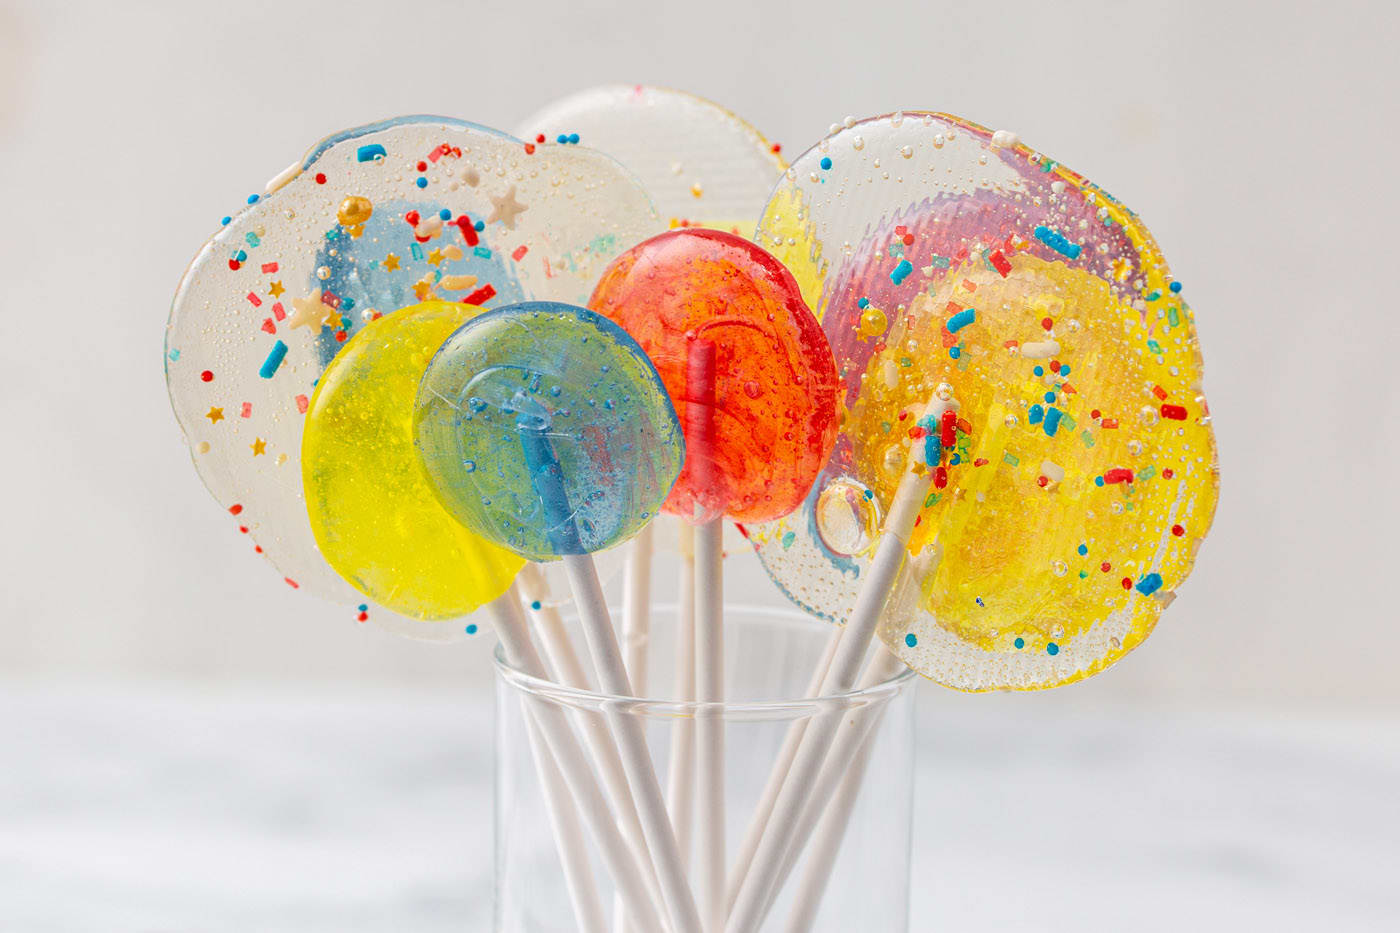 Pot o' Magic Lollipops 6-piece set by I Want Candy!